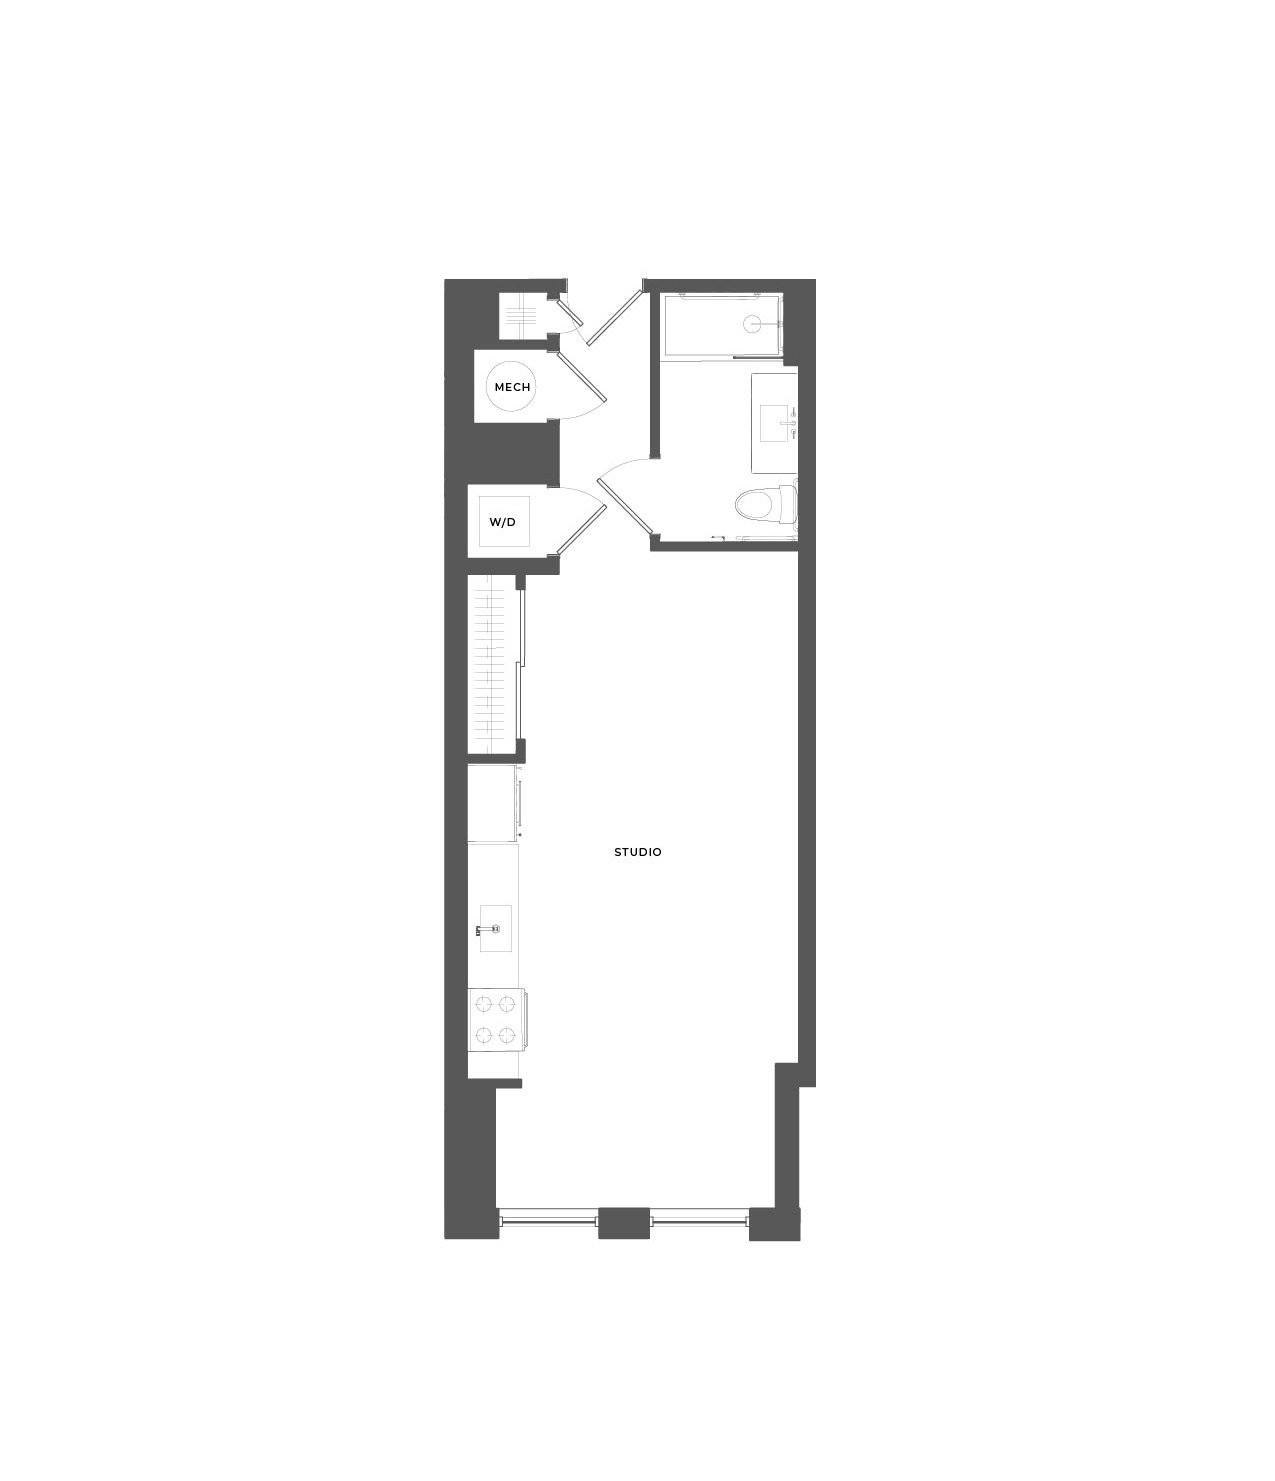 Floorplan of 1205